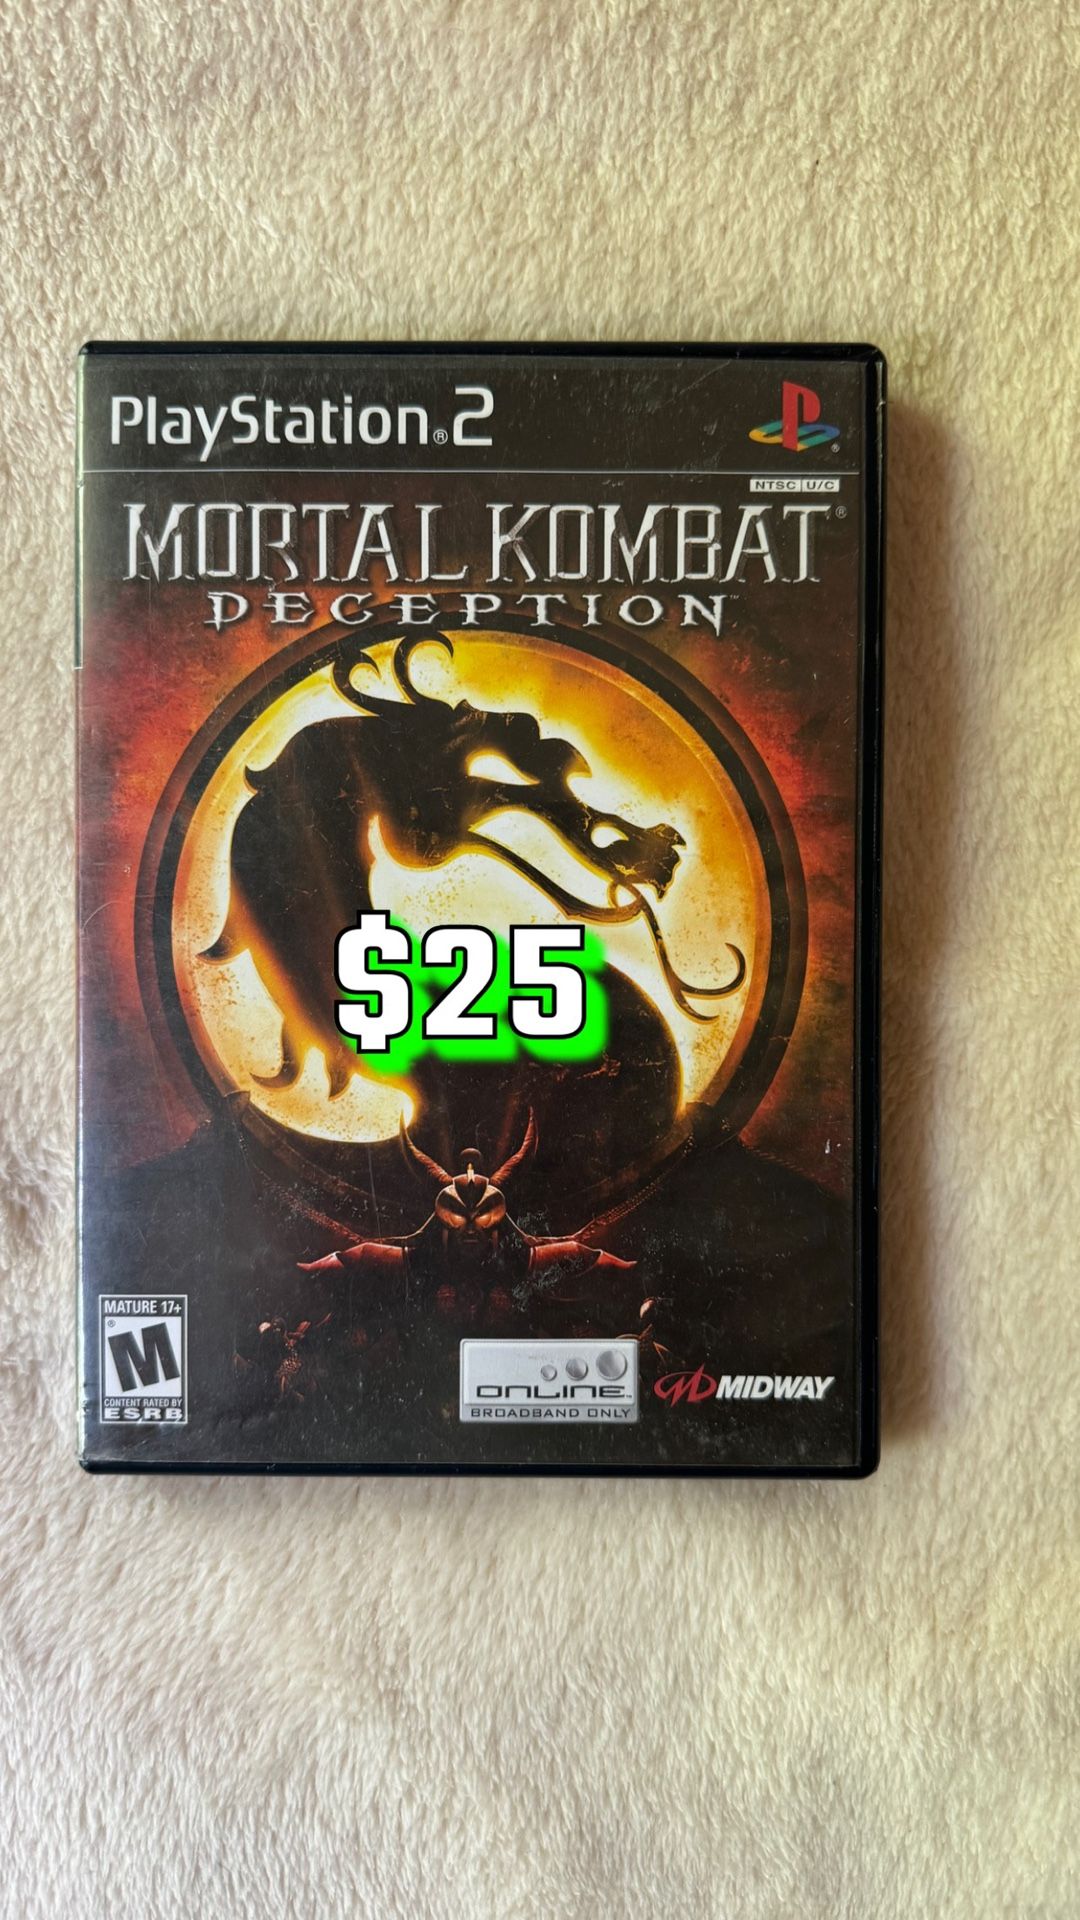 Mortal Kombat Deception for PS2